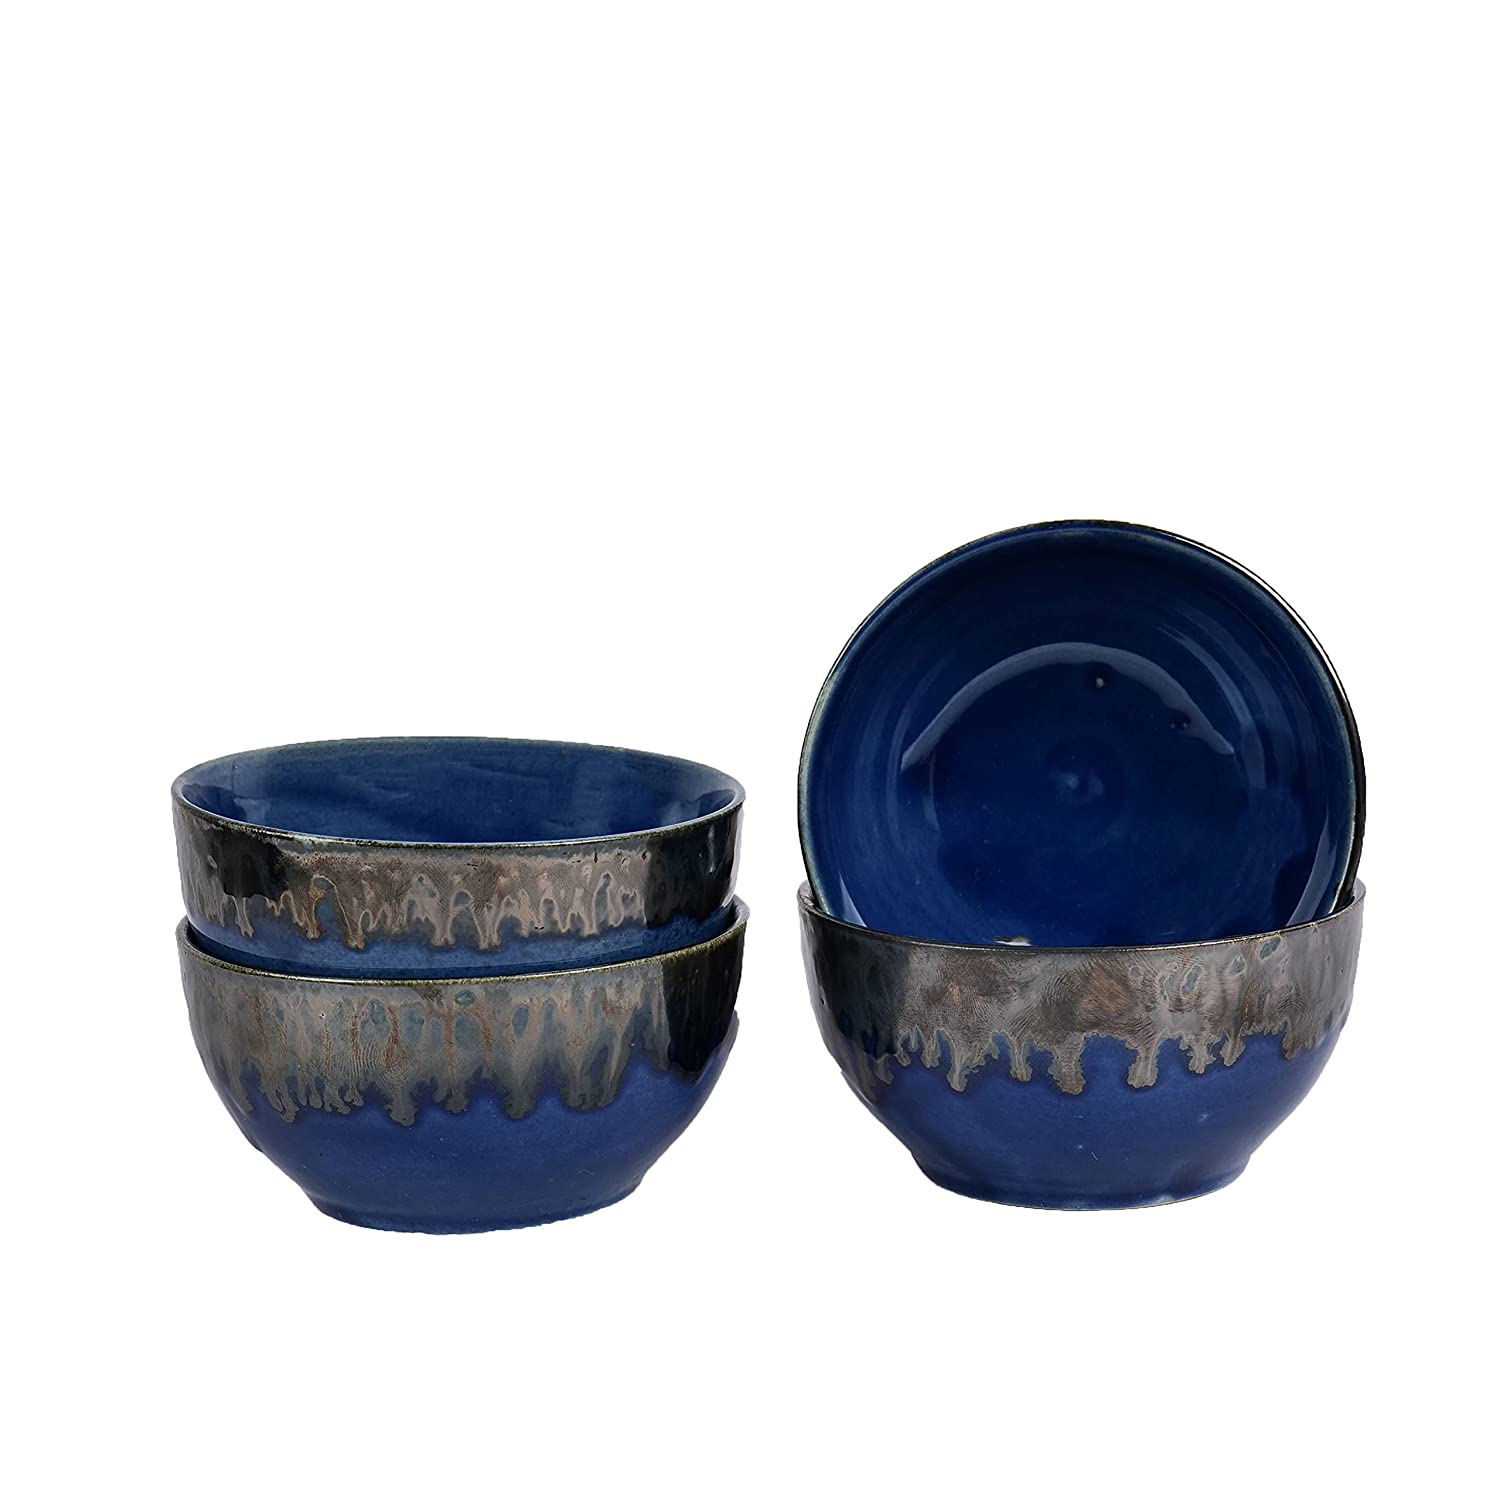 Dark Drips' Ceramic Bowls Studio Pottery Dining Bowls/Katoris  (Set of 4, Blue, 220 ML) - Homely Arts